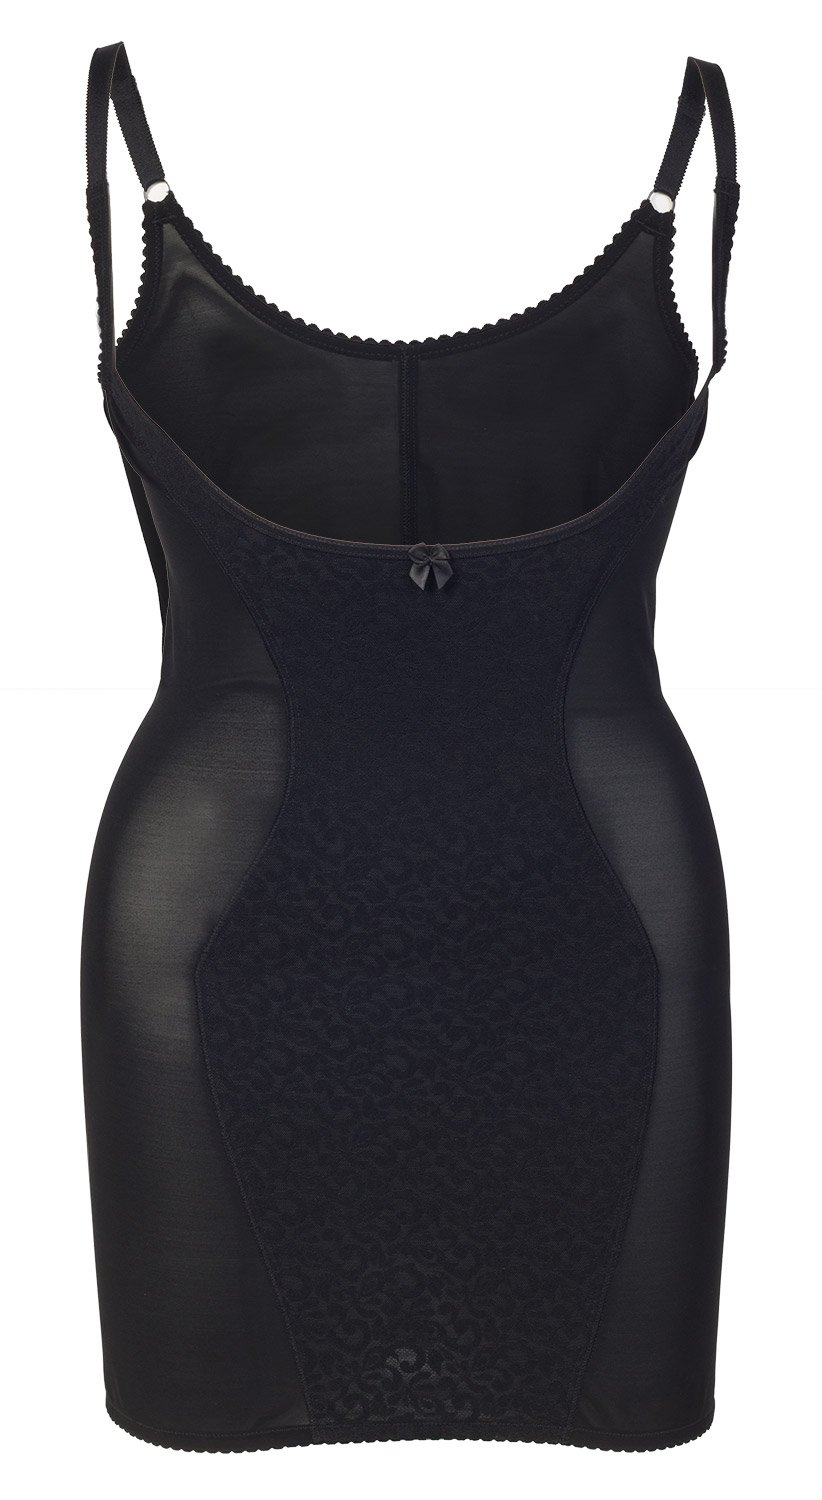 SALLY - Sort body Controle torsette shapeware kjole fra Plaisir